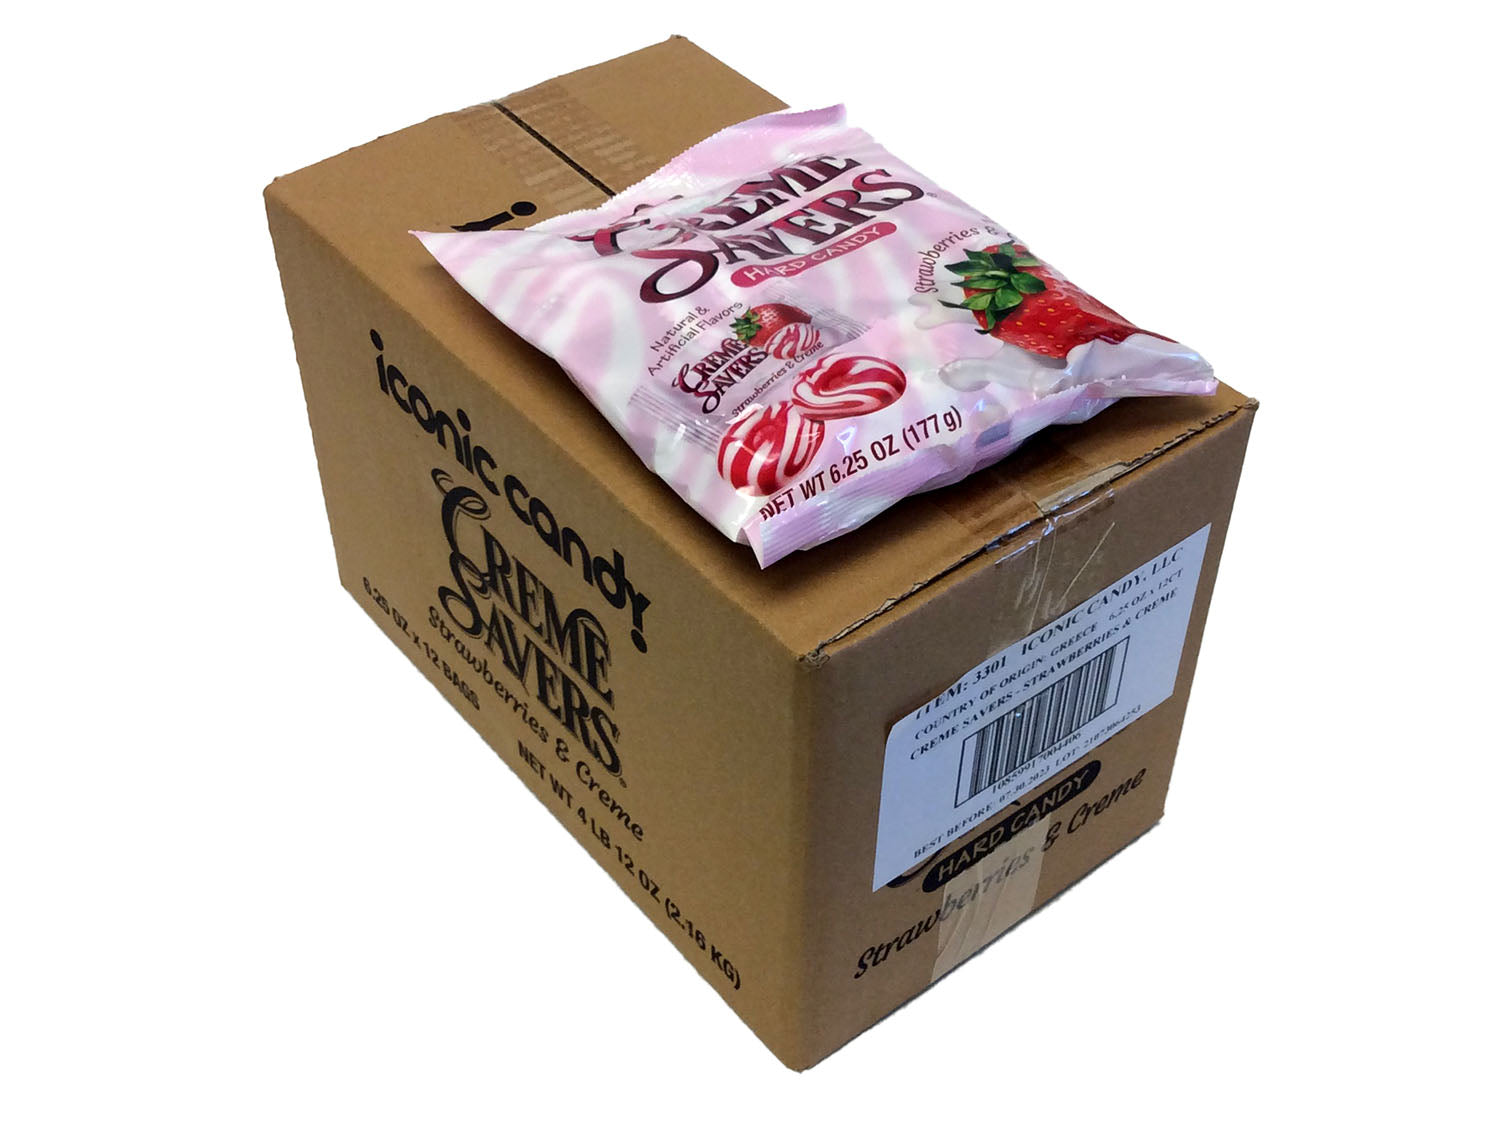 Creme Savers - Strawberries & Creme - 6.25 oz bag - box of 12